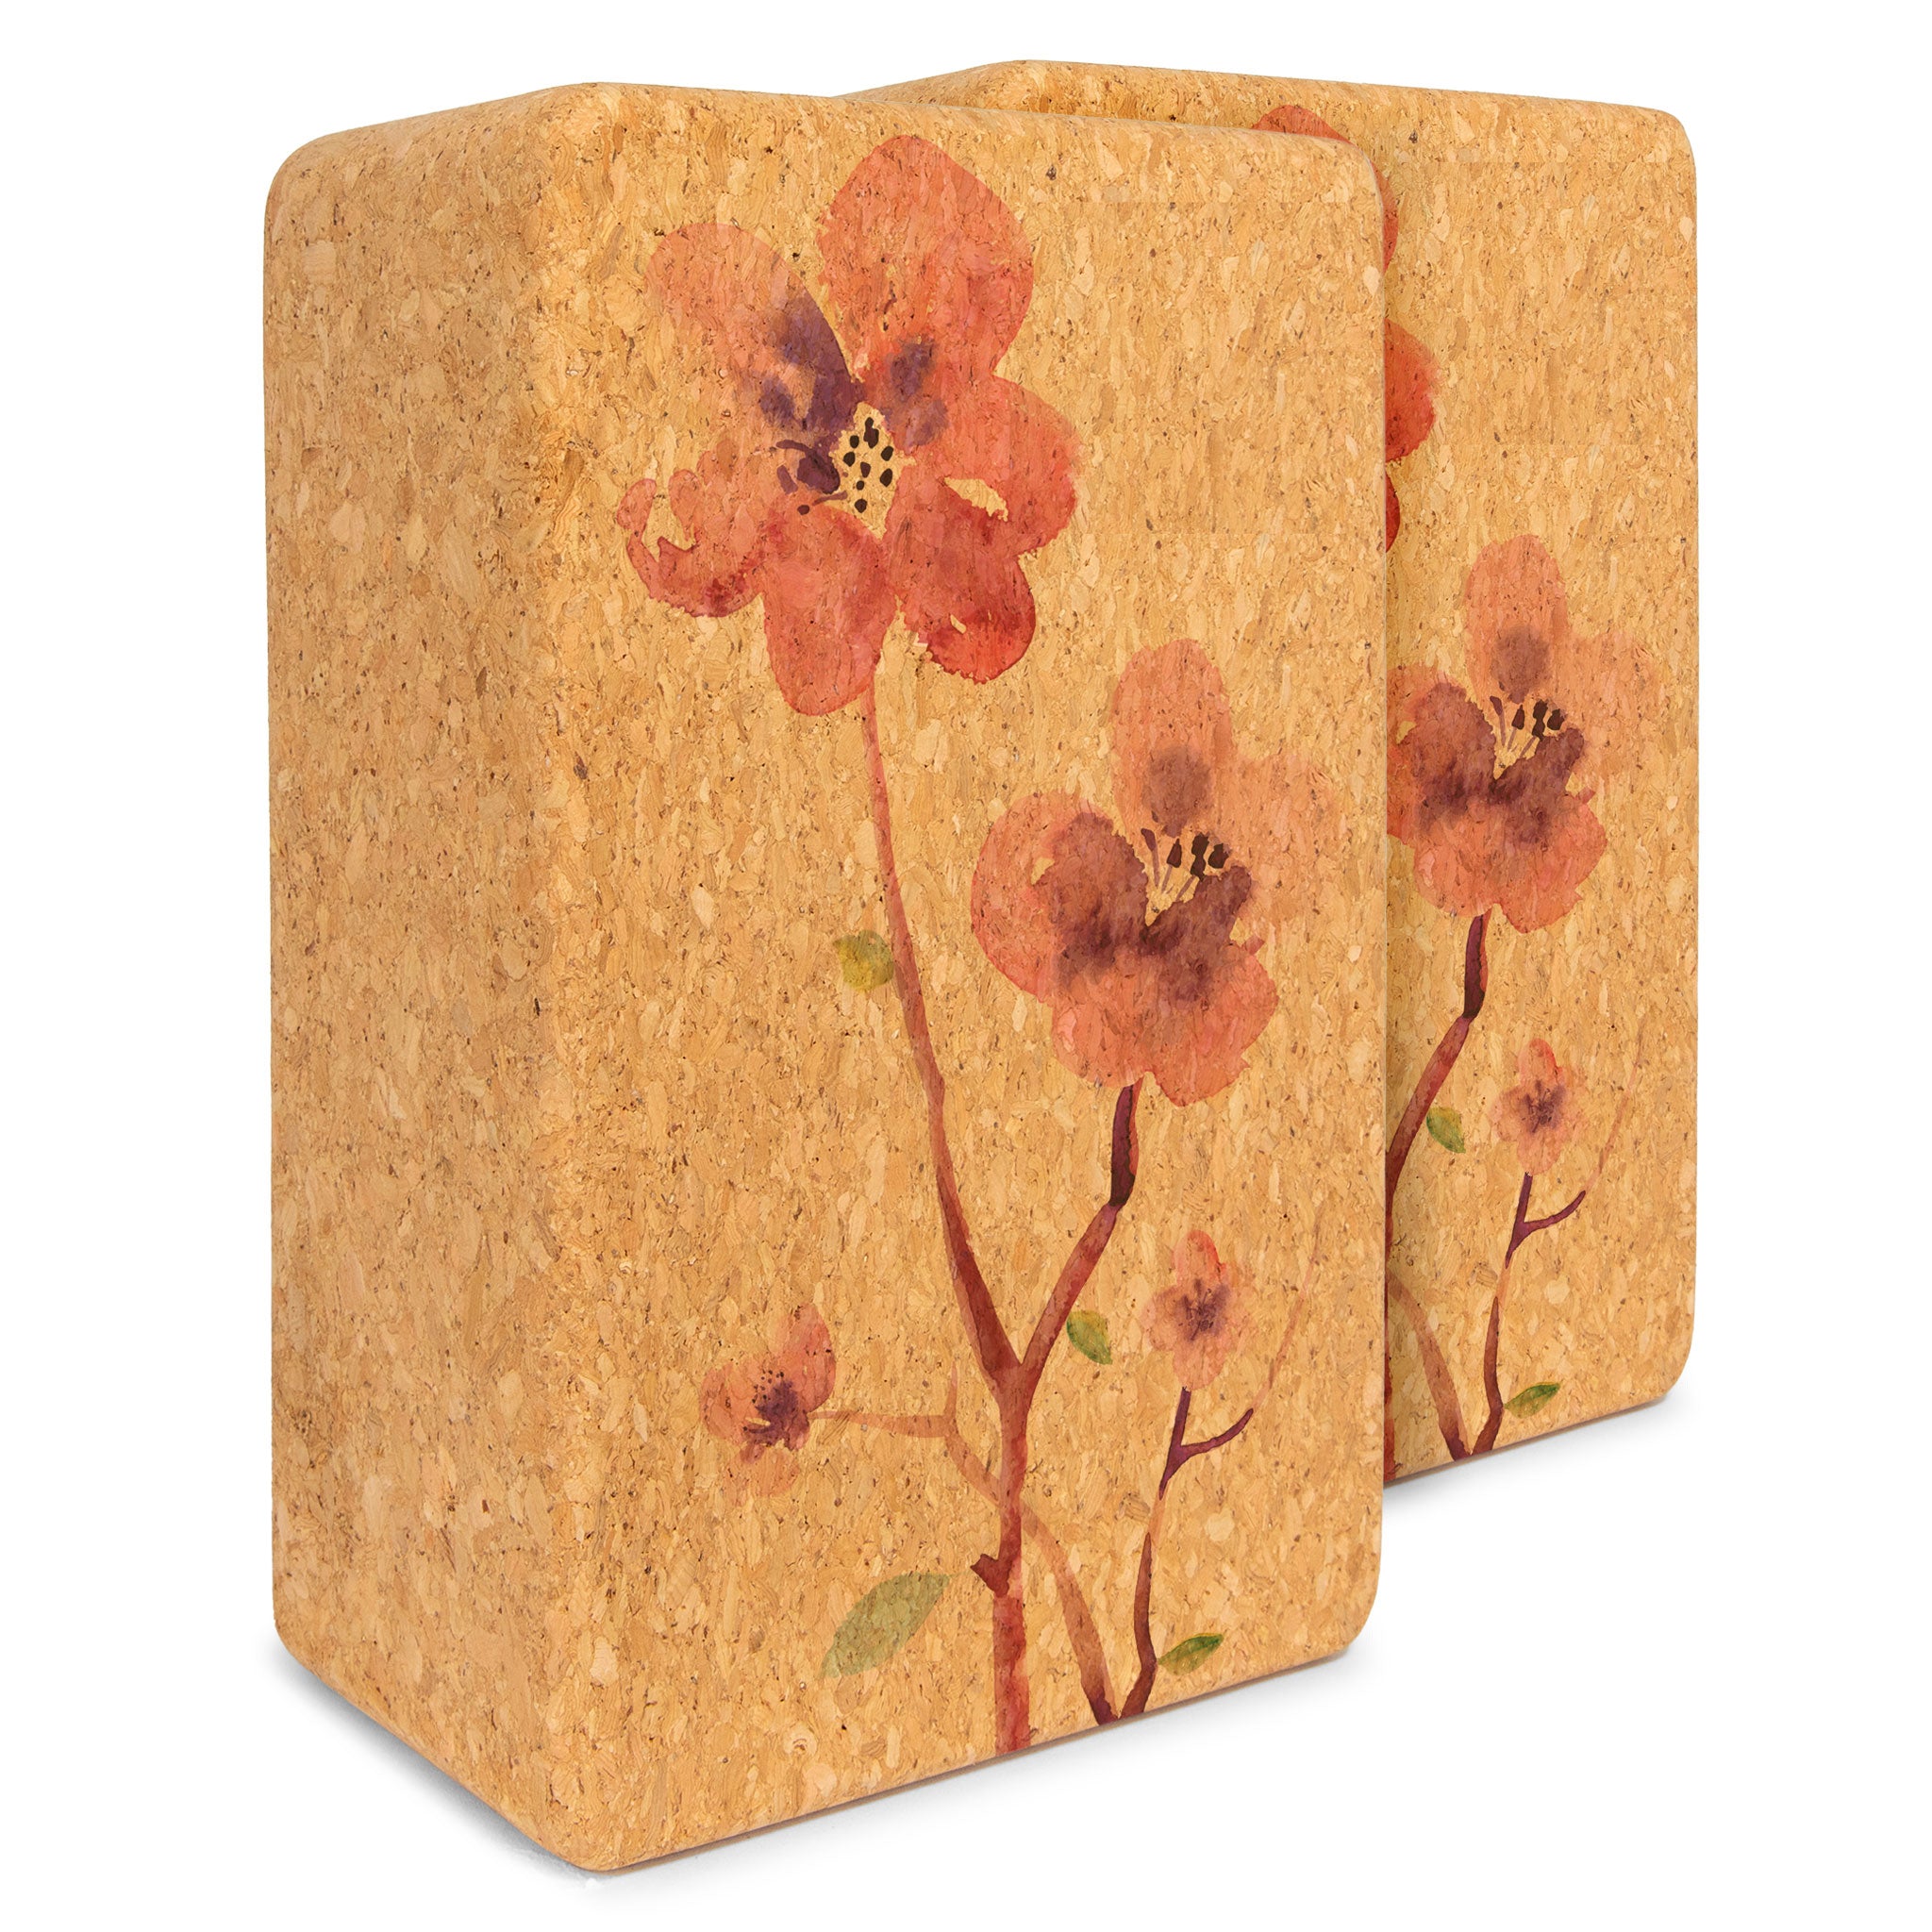 Cork Yoga Block or set - Earth Friendly sturdy cork wood, beveled edges  easy grip